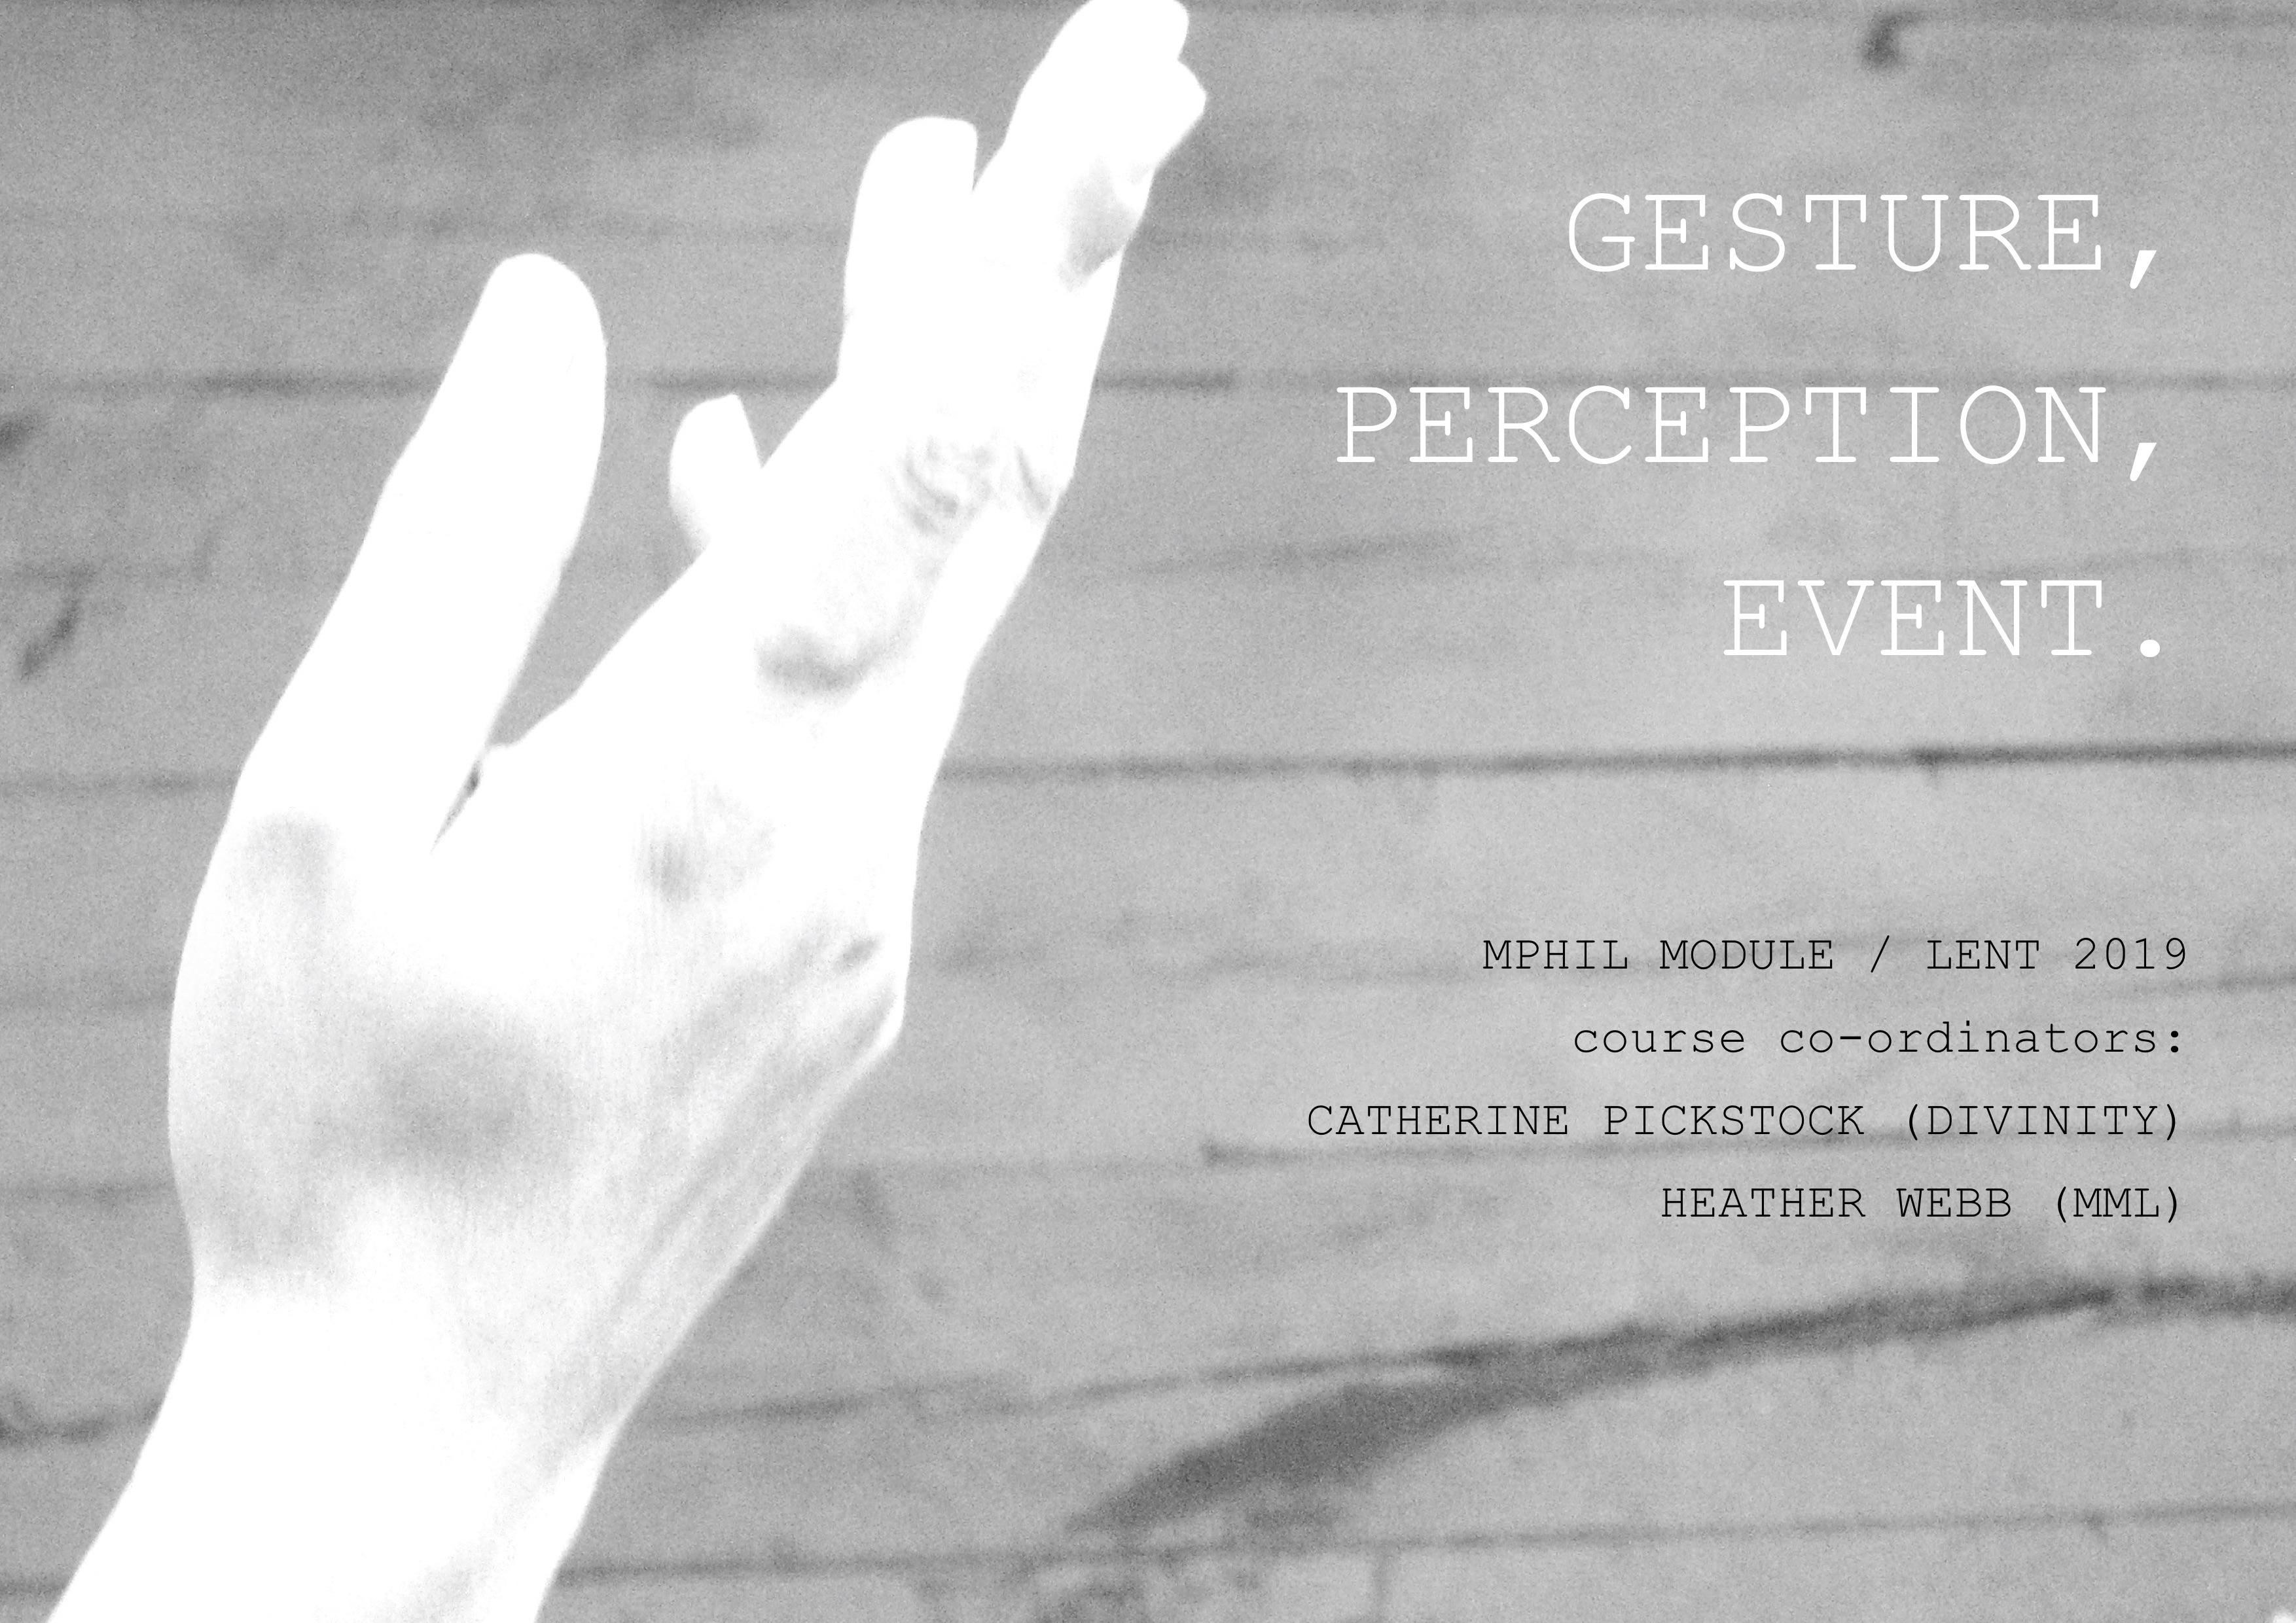 Gesture, Perception, Event